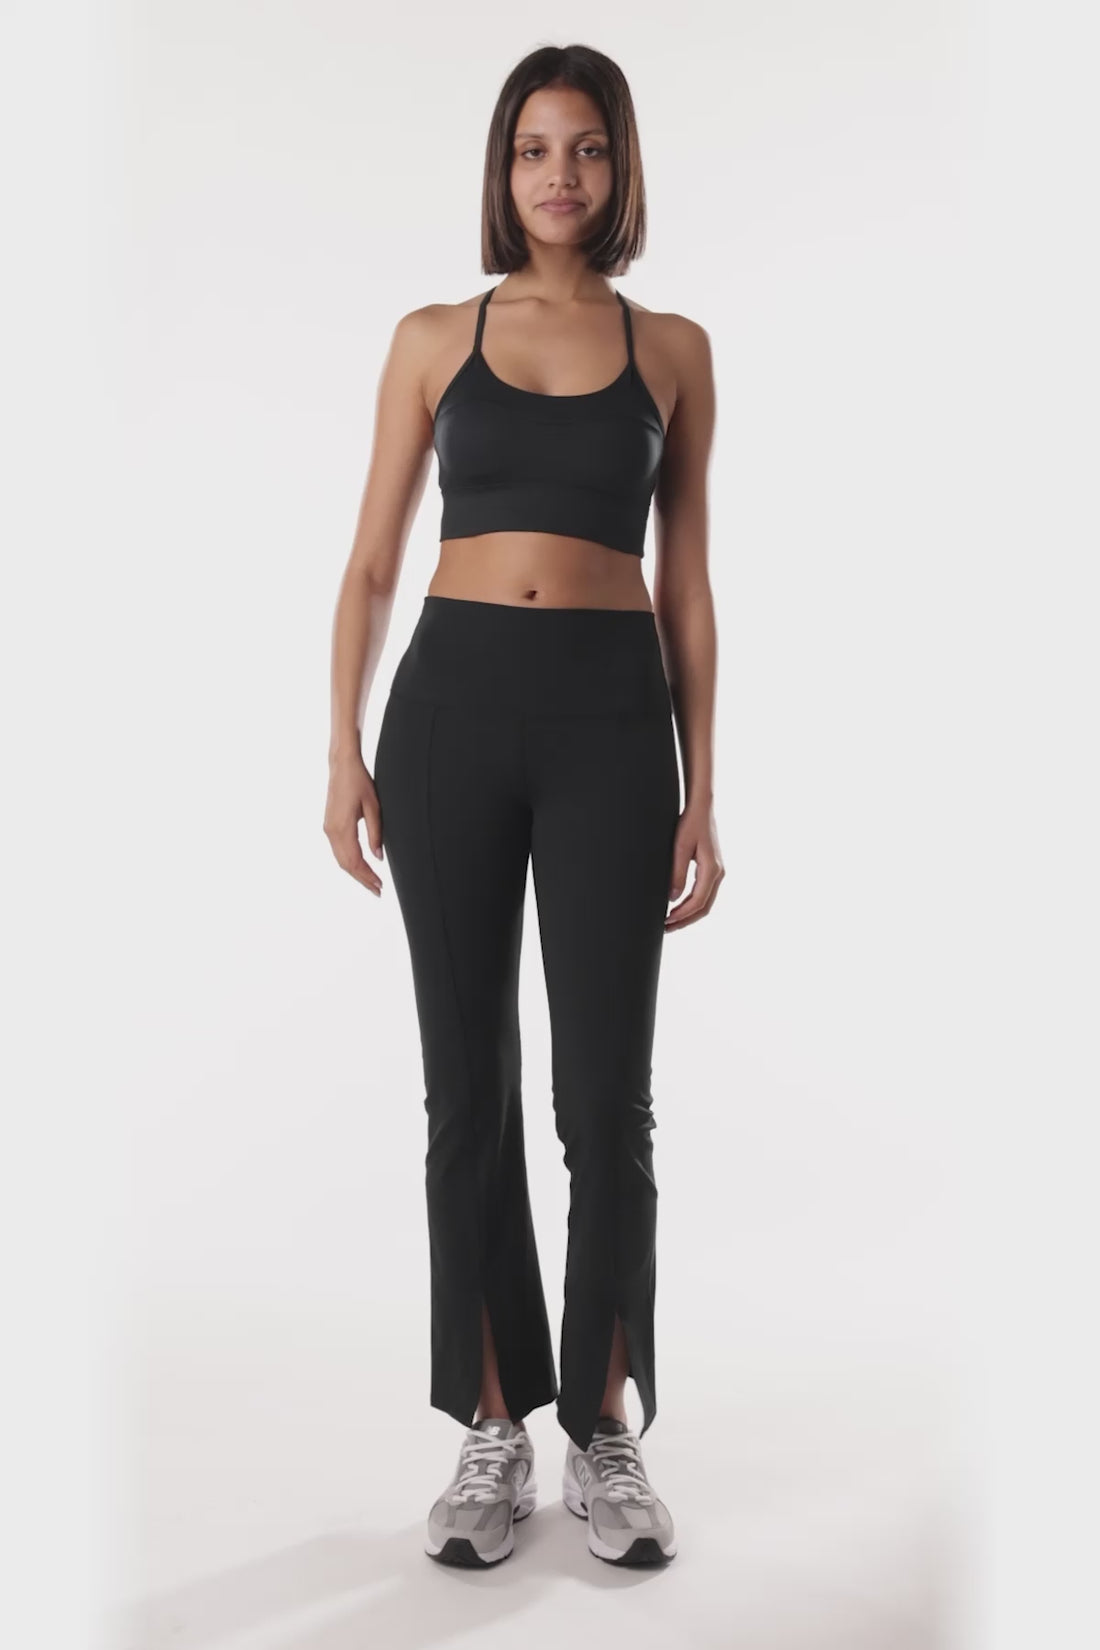 Customized Logo Seamless Knit Gym Wear Yoga Ladies Workout Clothes